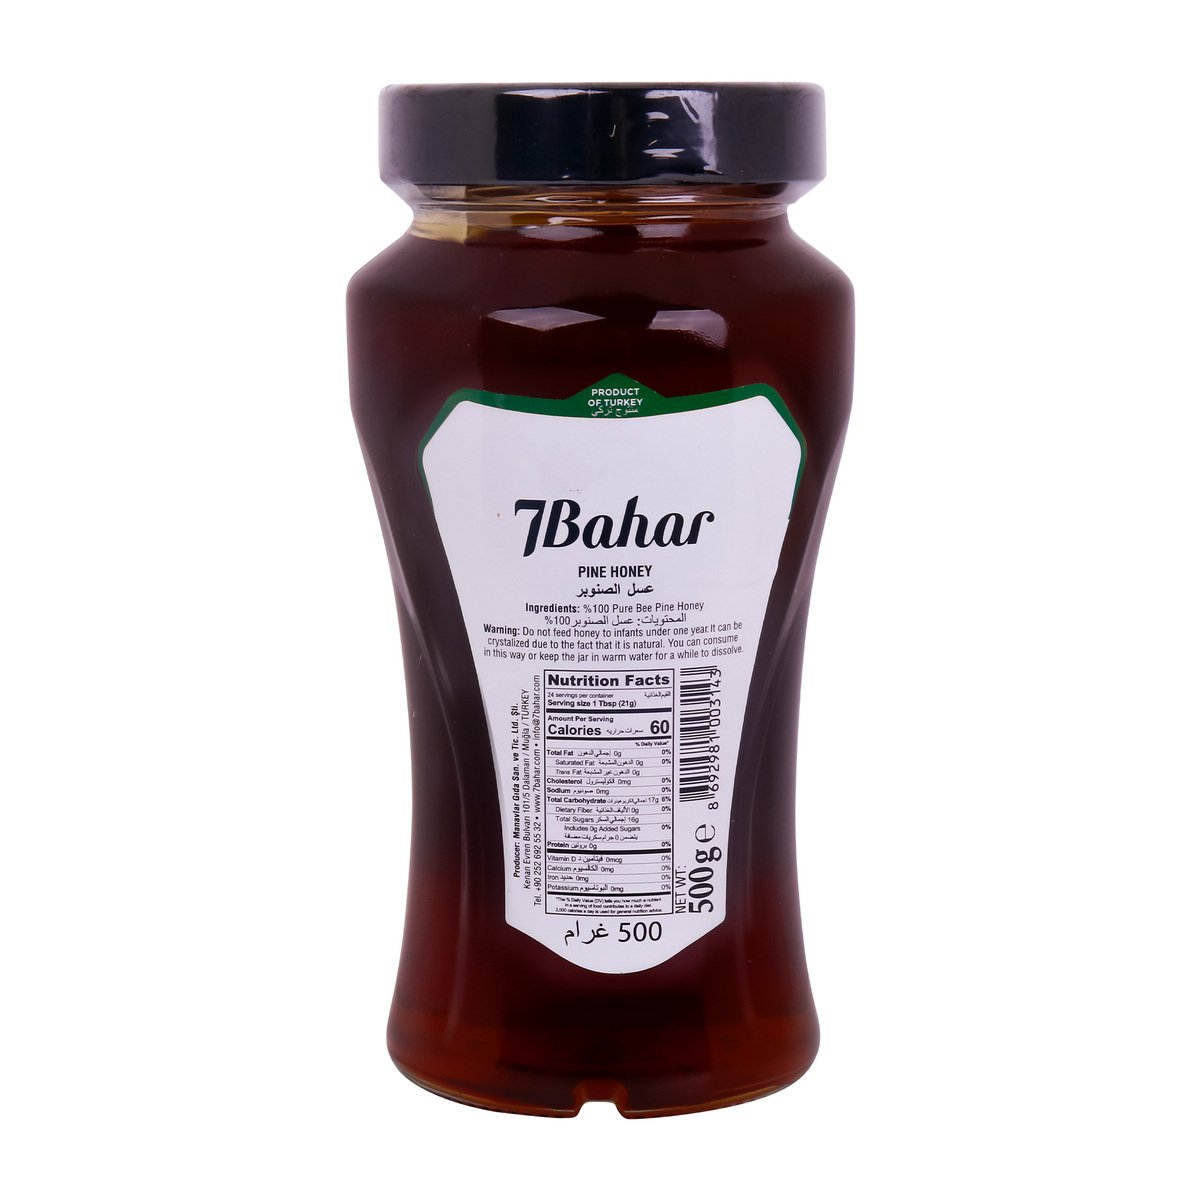 7Bahar Premium Pine Blossom Honey 500g